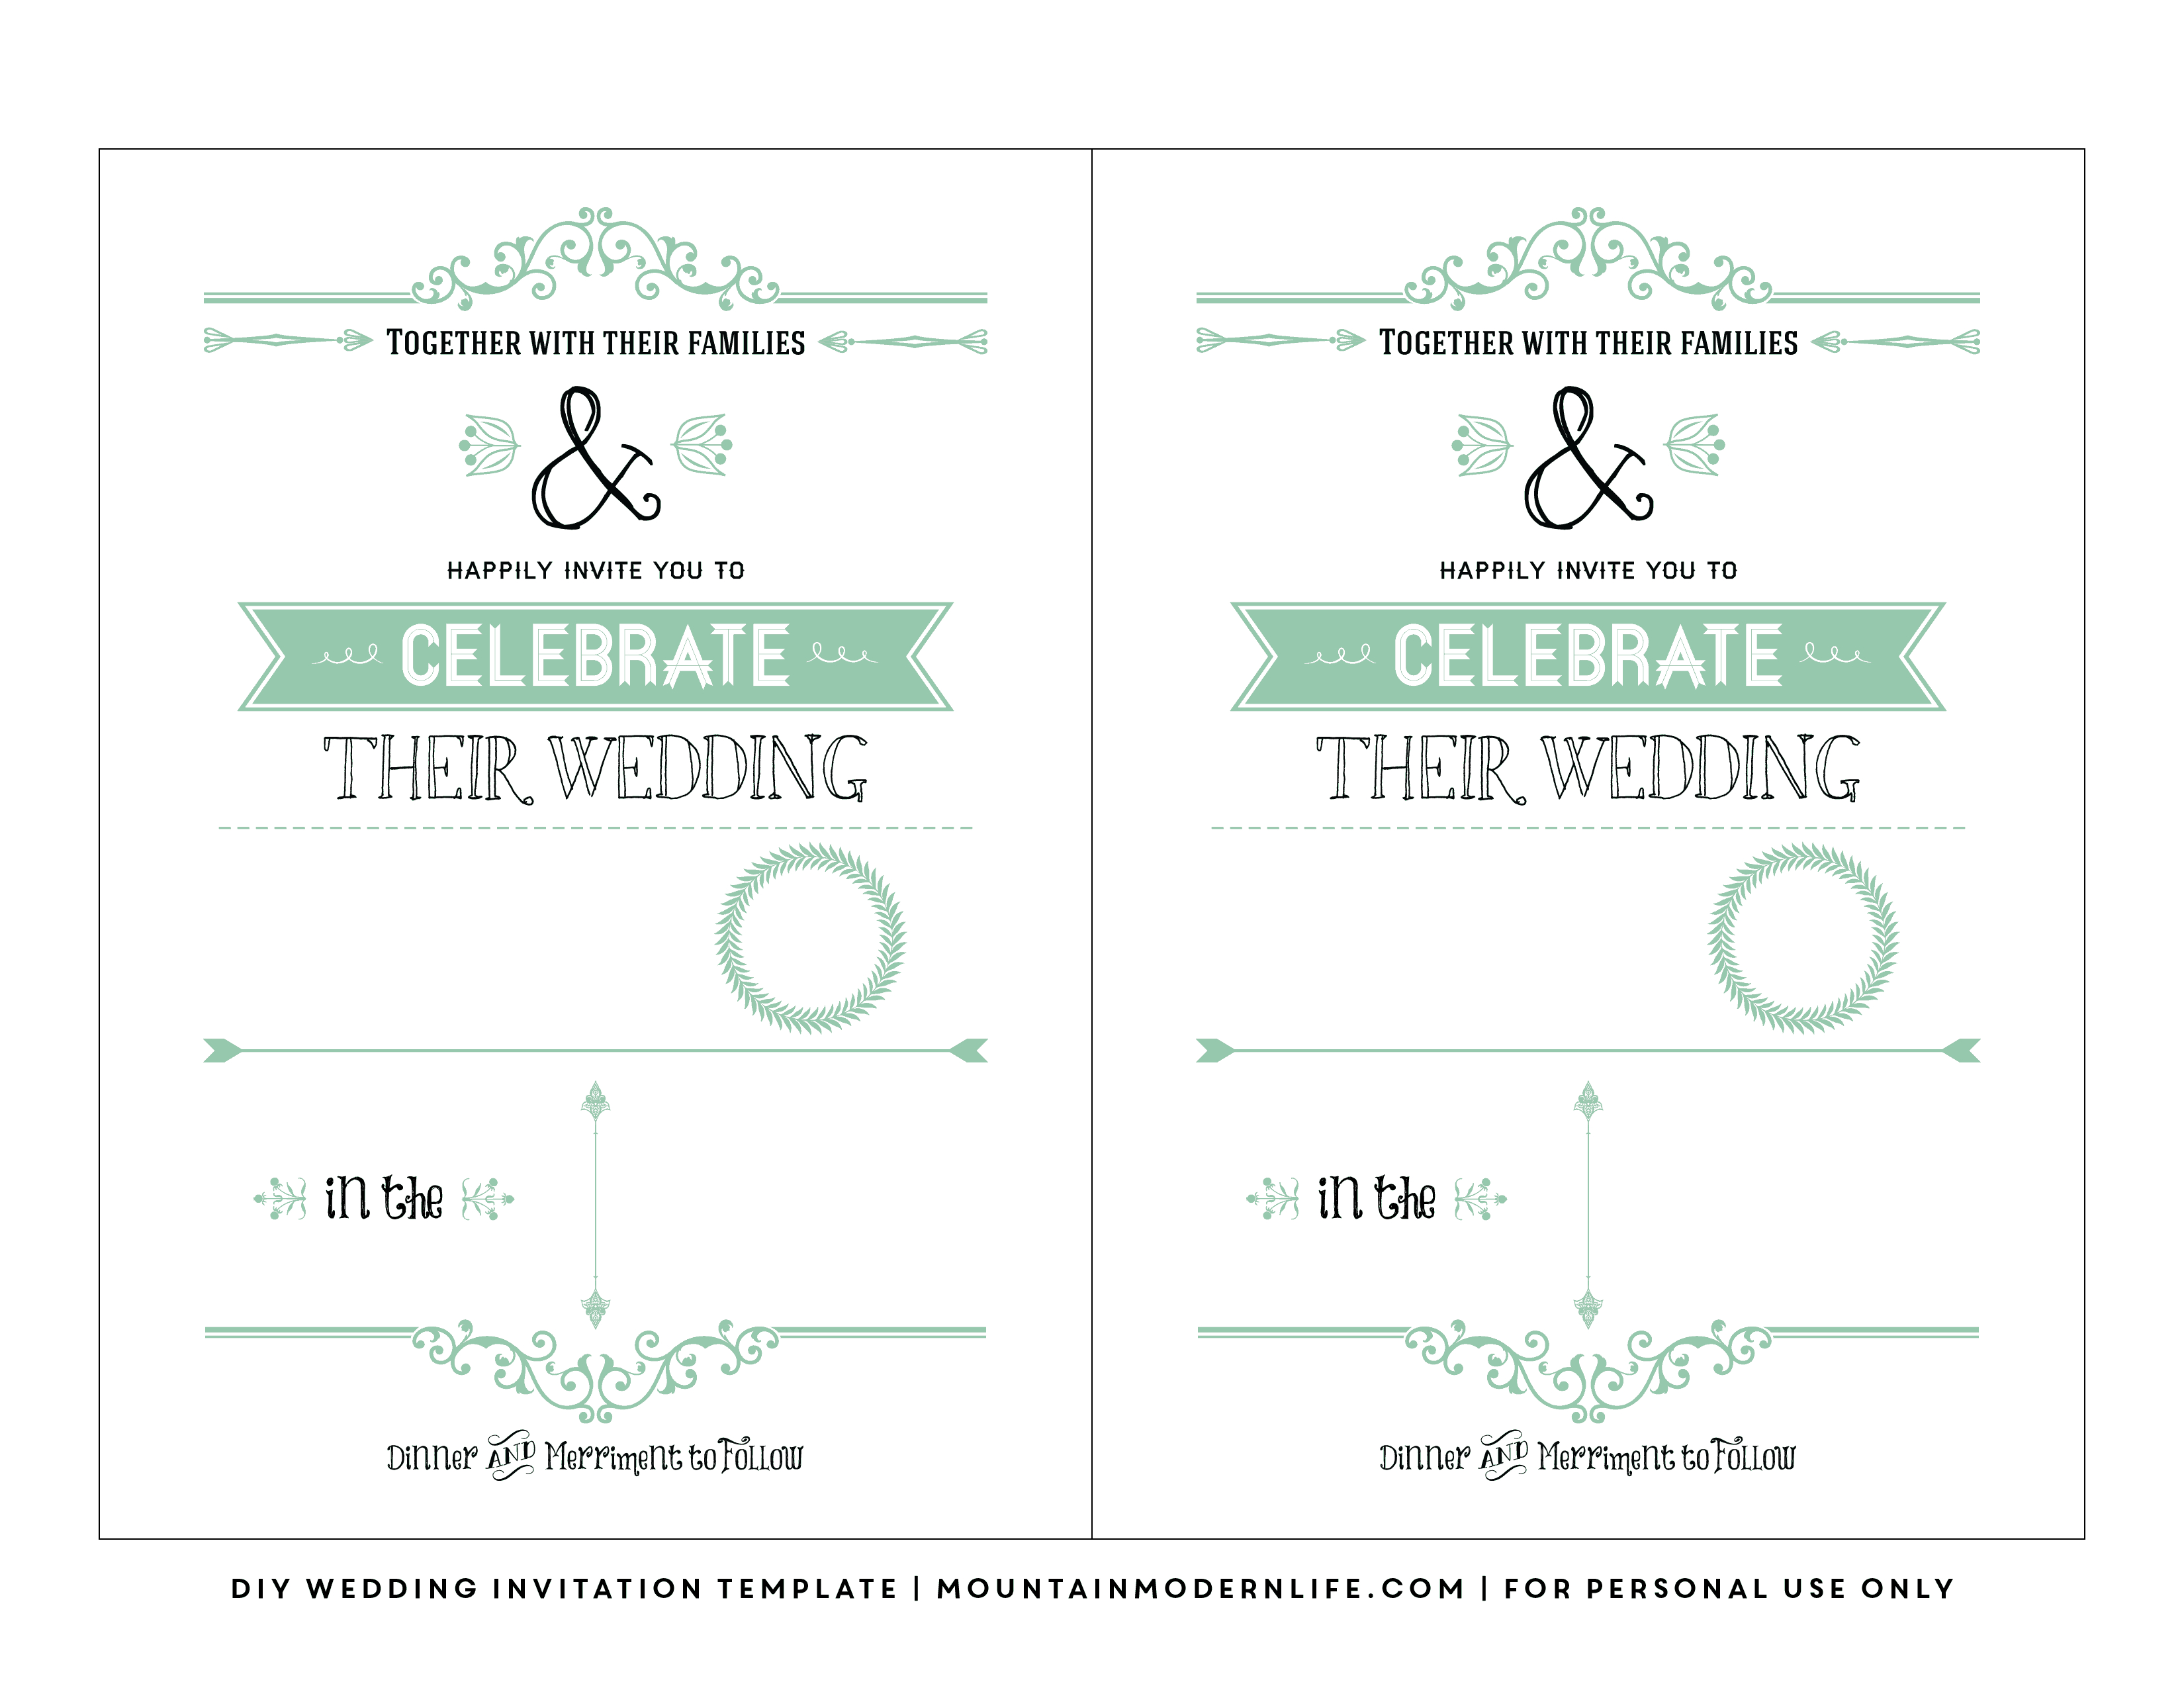 Free Wedding Invitation Template | Mountainmodernlife - Free Printable Wedding Invitations